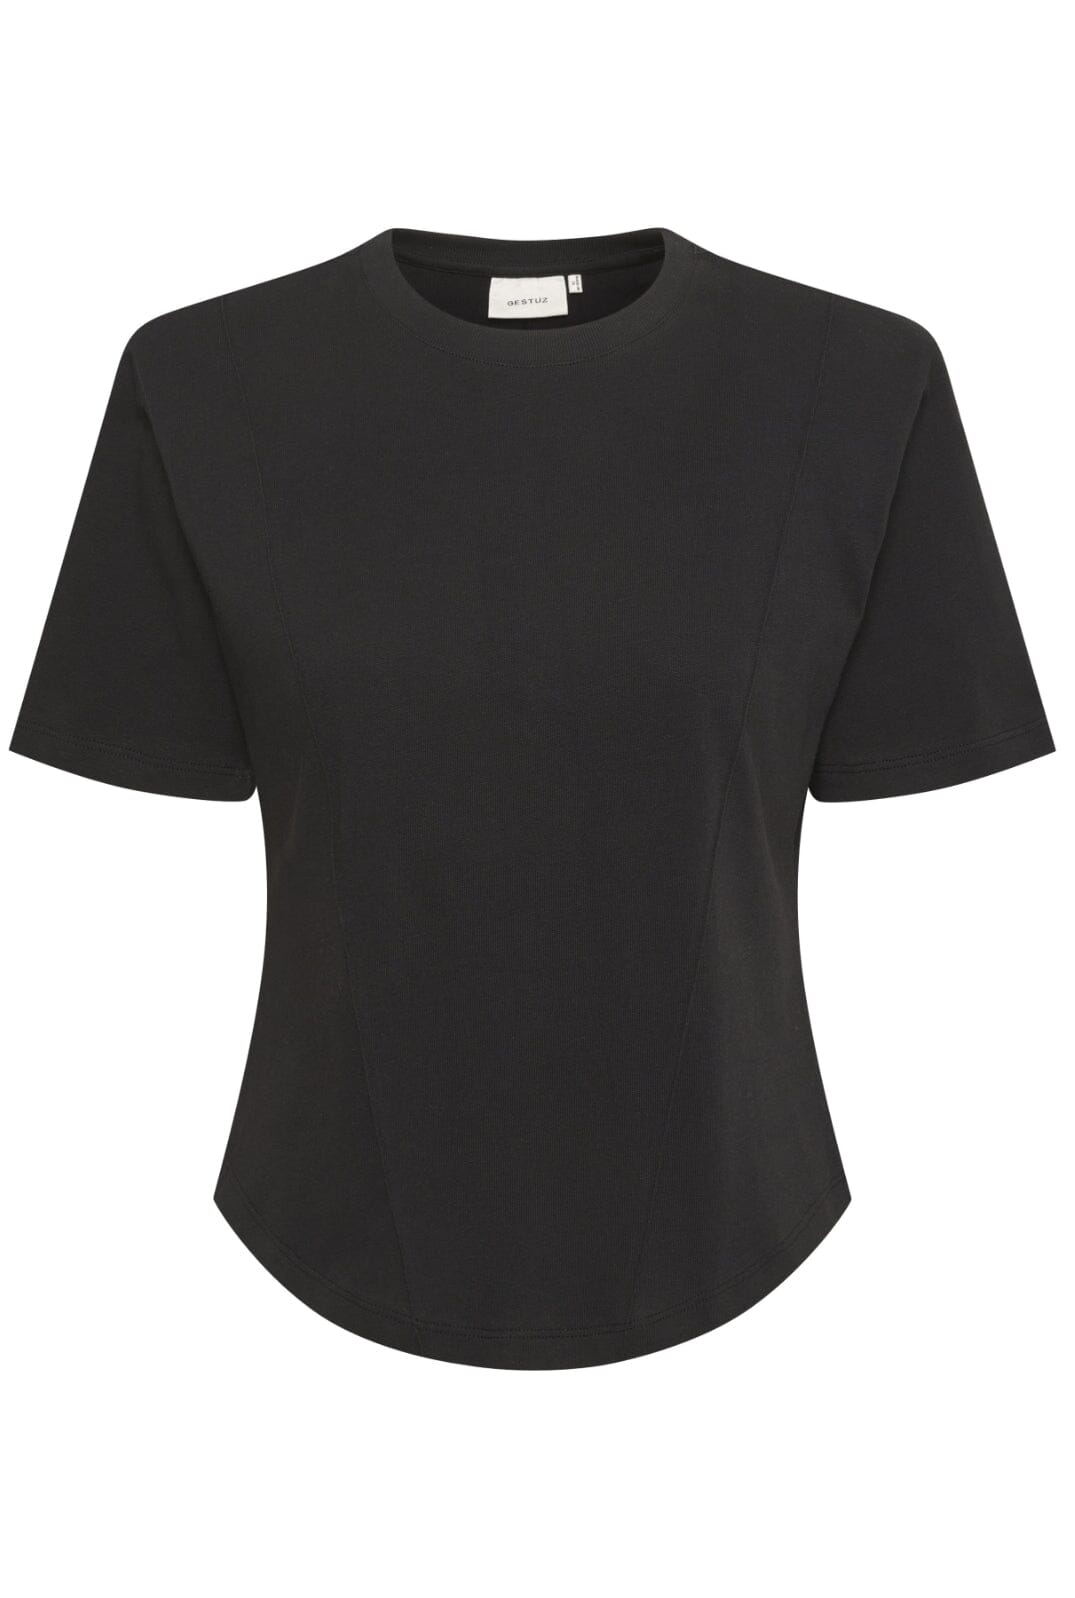 Gestuz - ShilohGZ tee - Black T-shirts 